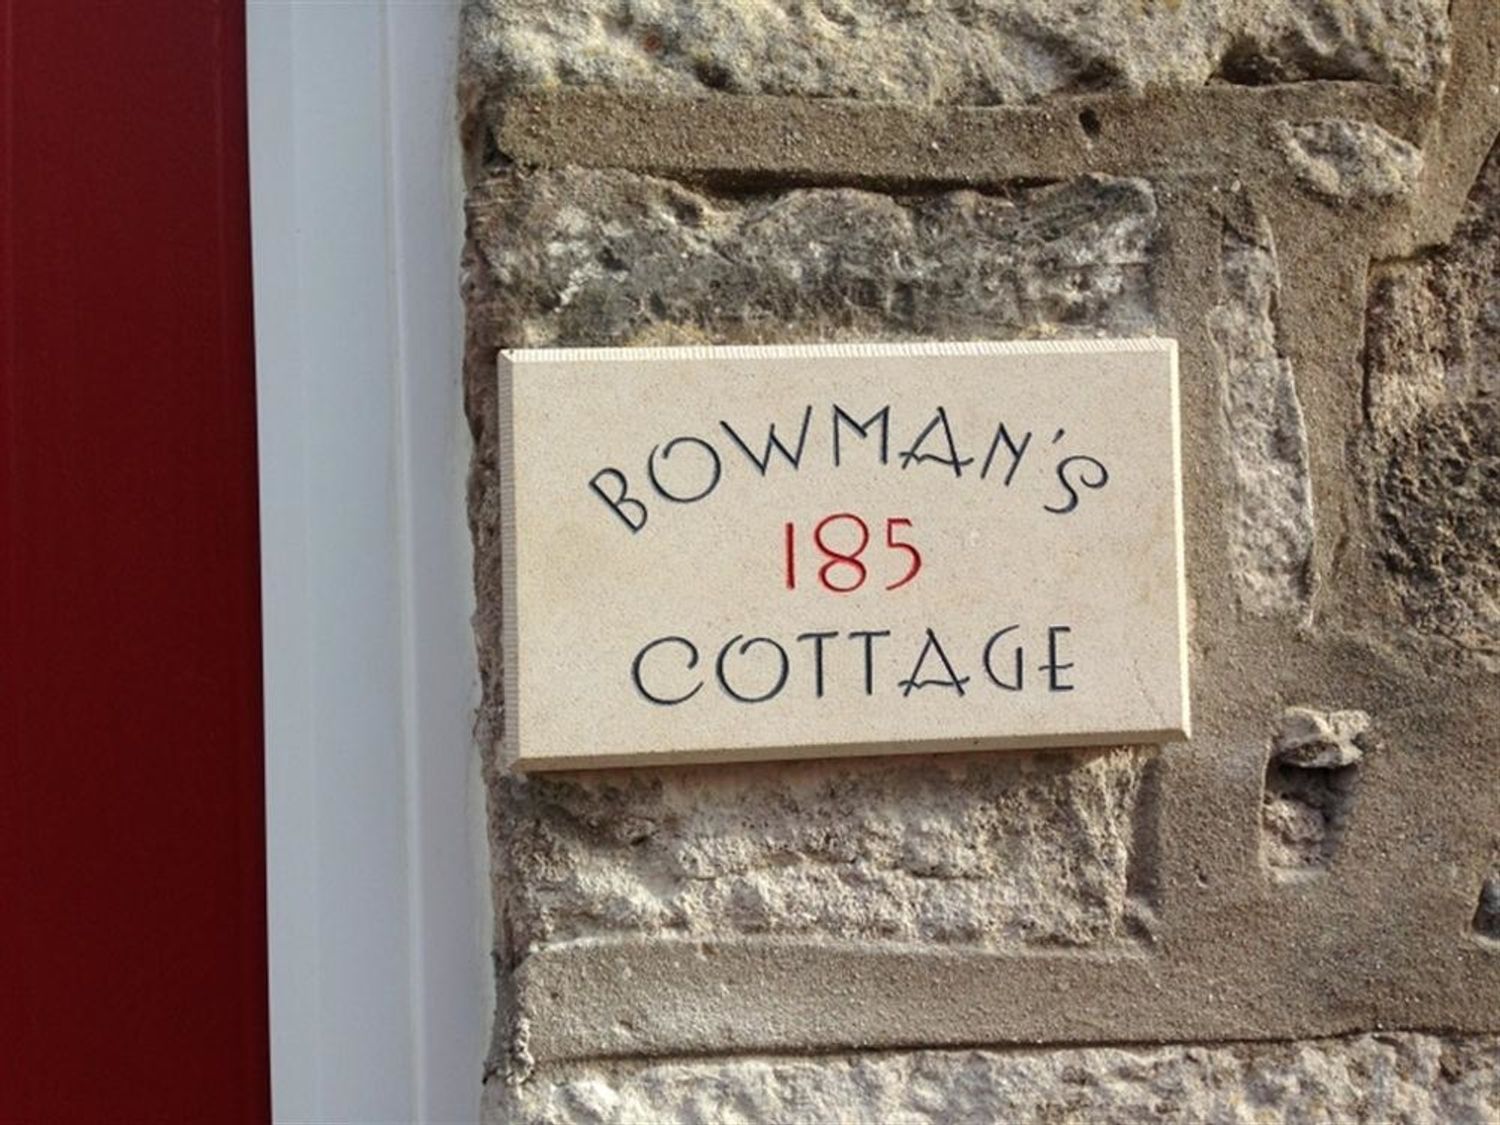 Bowman's Cottage, Wakeham, Portland